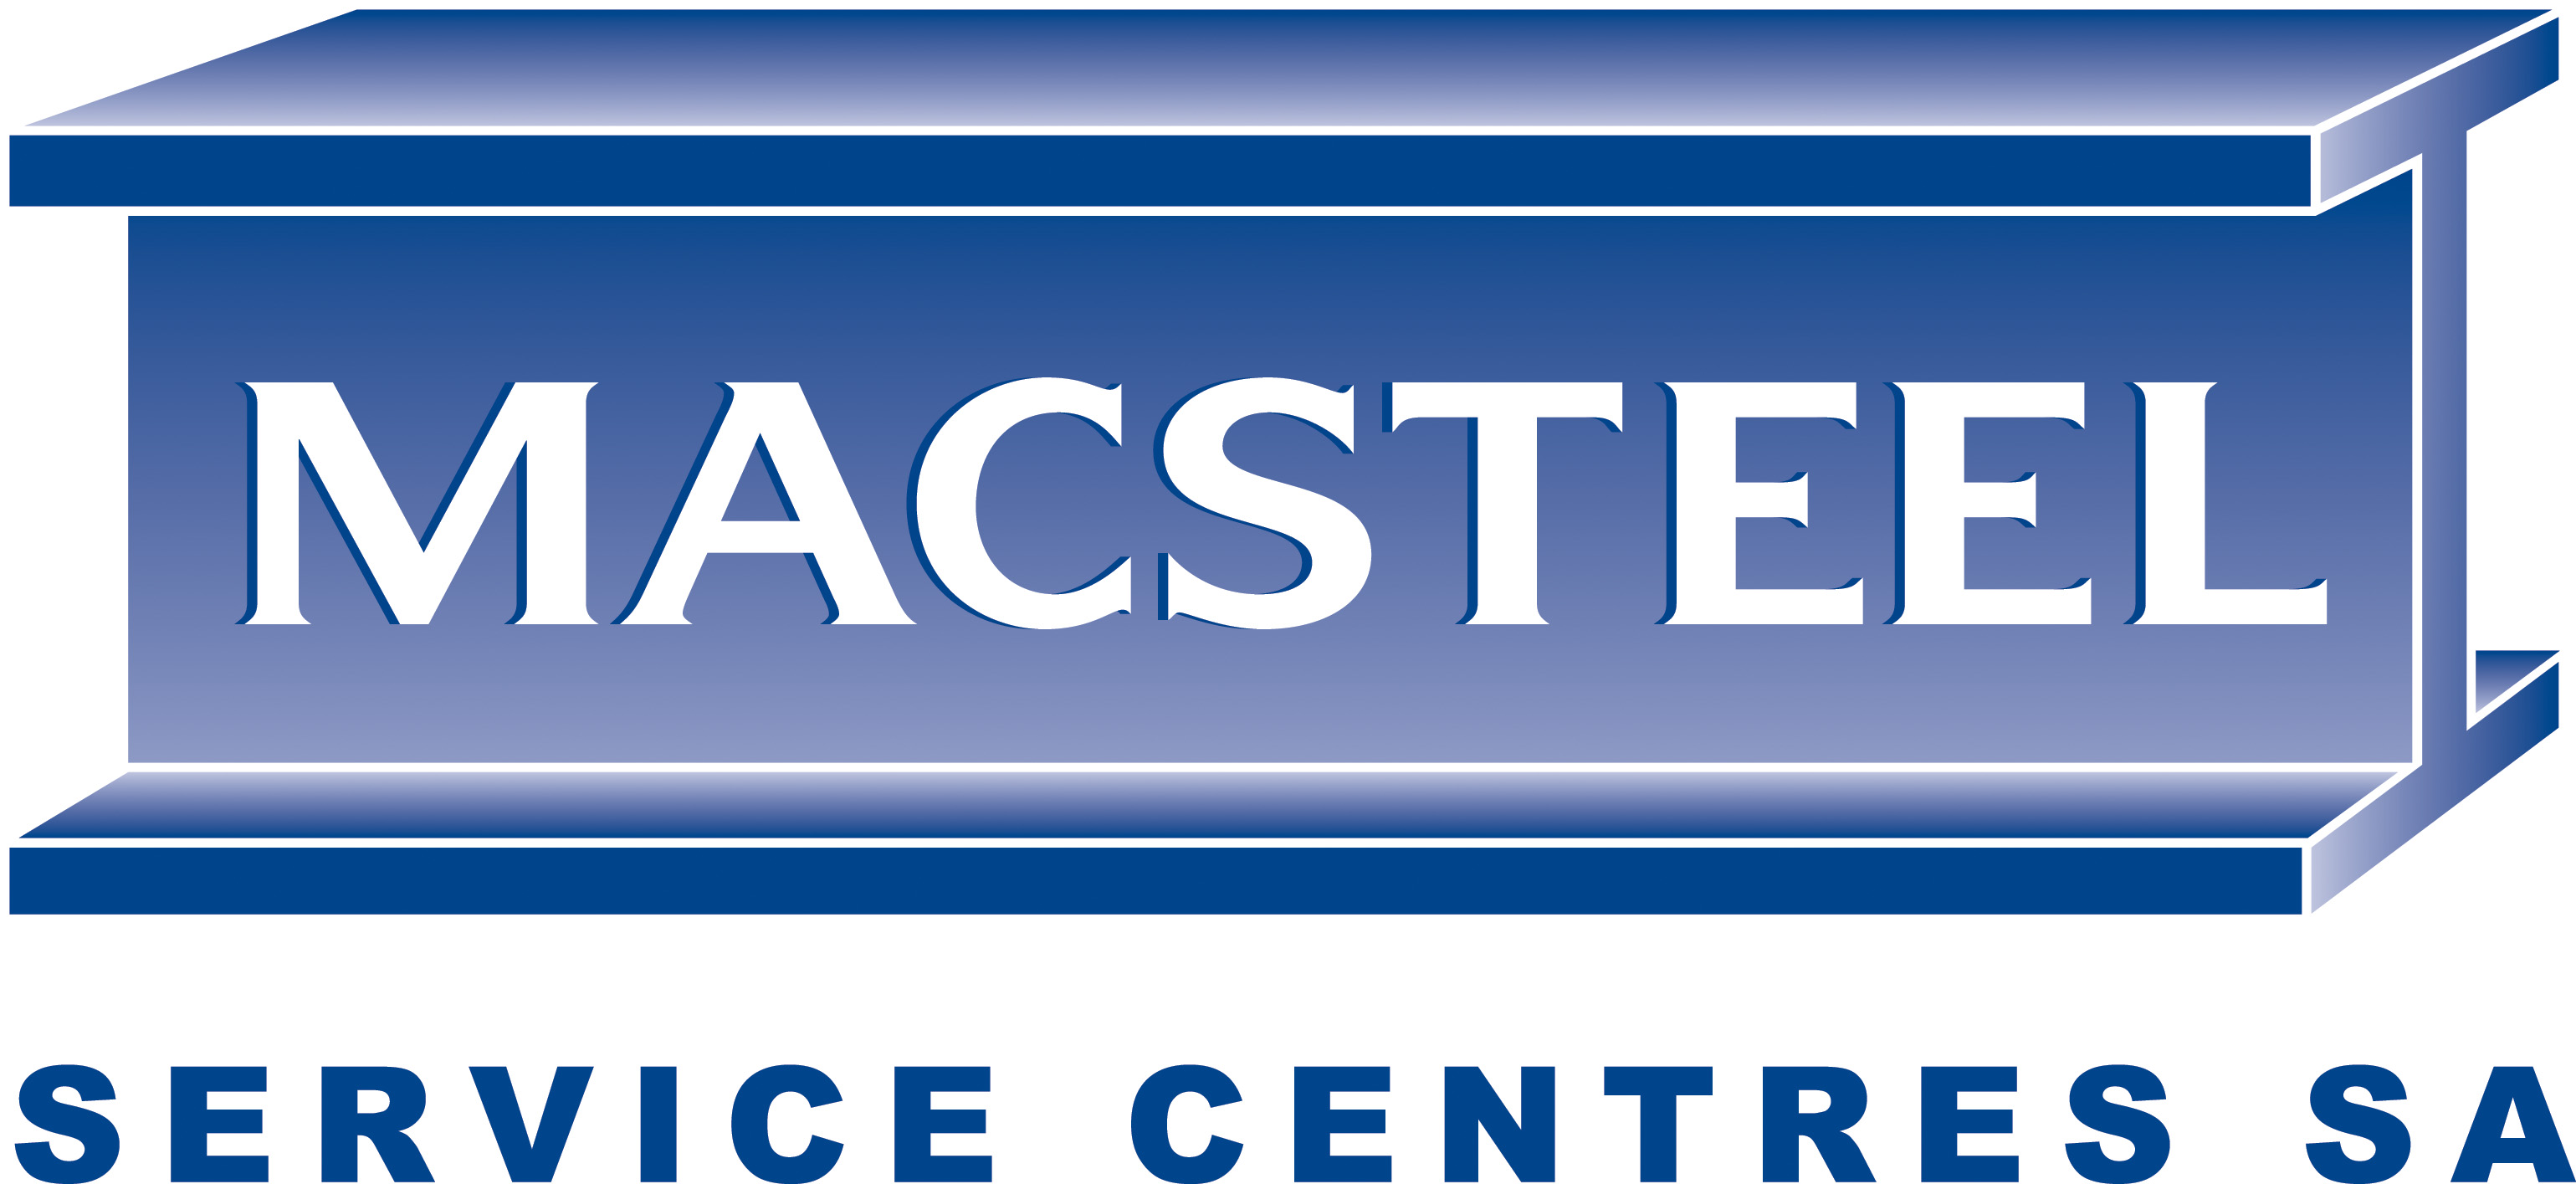 Macsteel Service Centres SA (Pty) Ltd logo